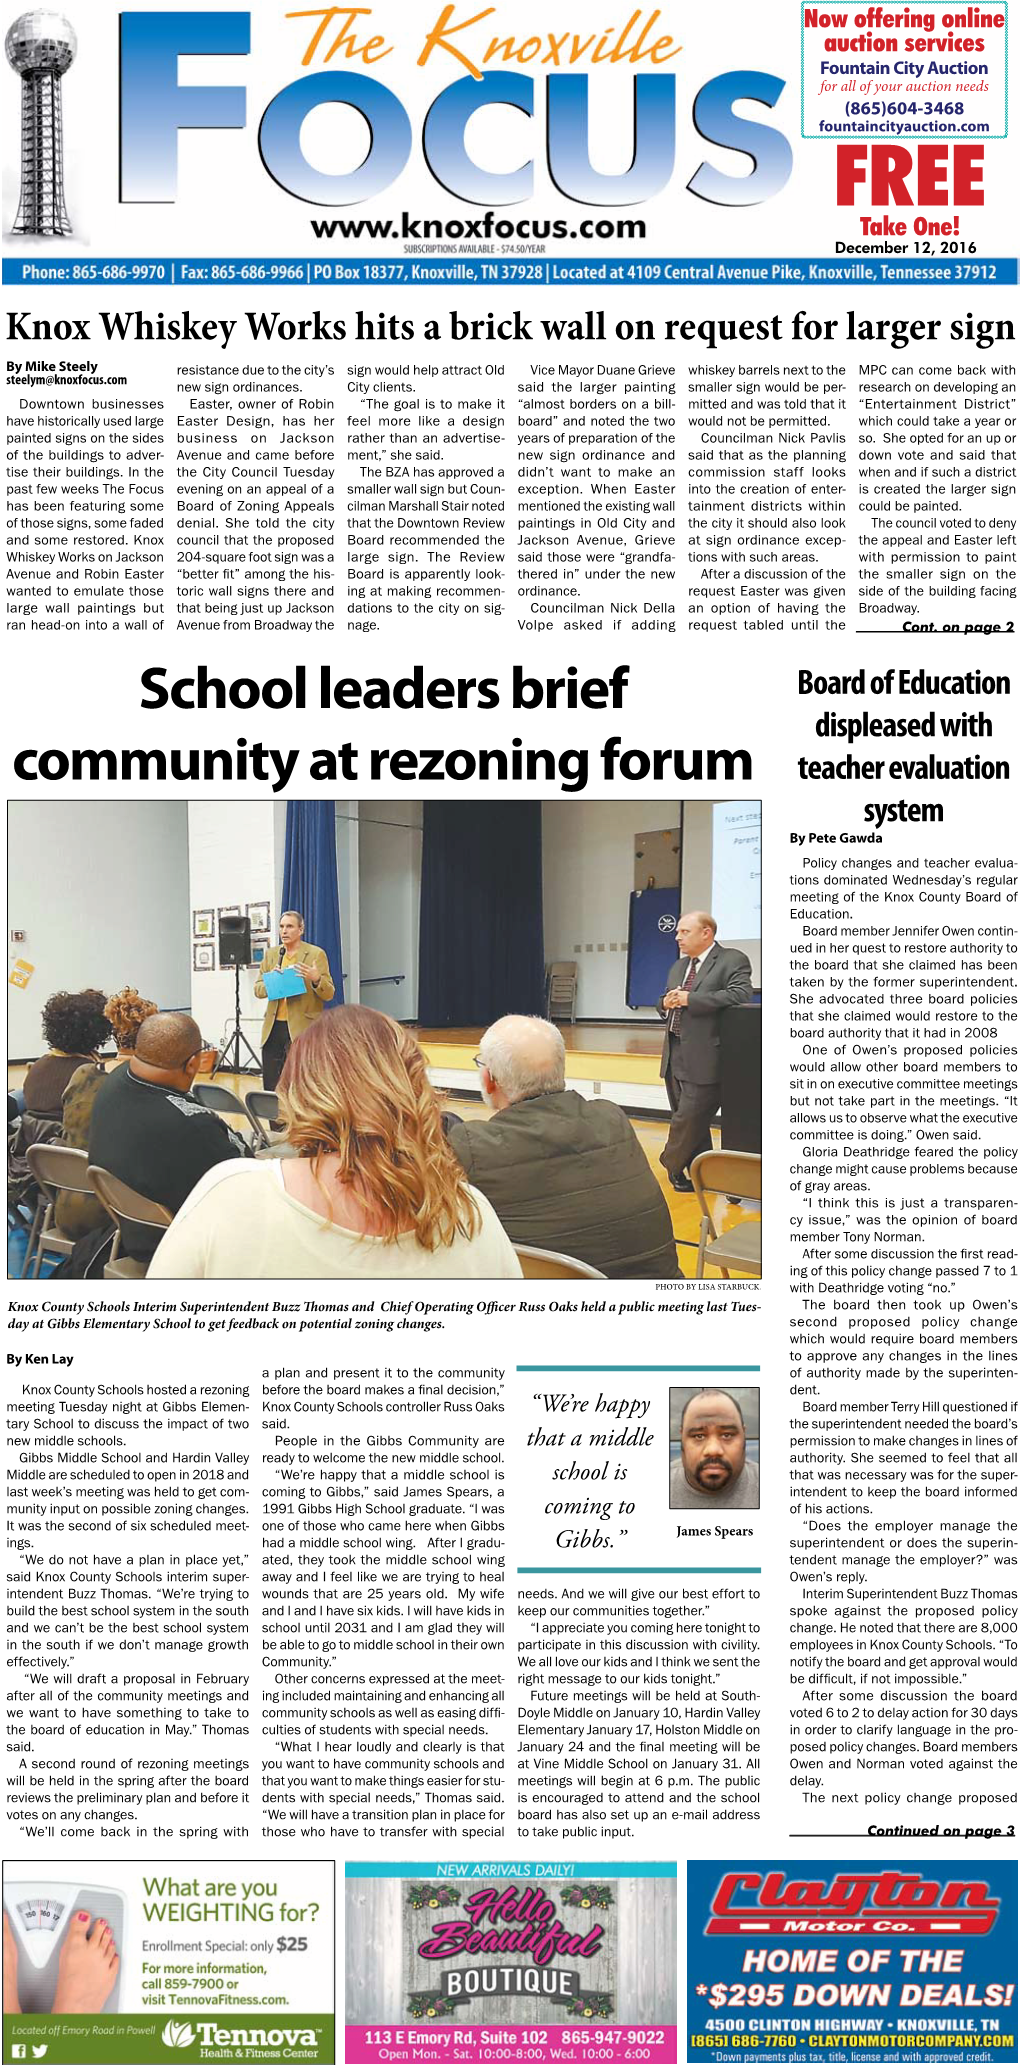 School Leaders Brief Community at Rezoning Forum